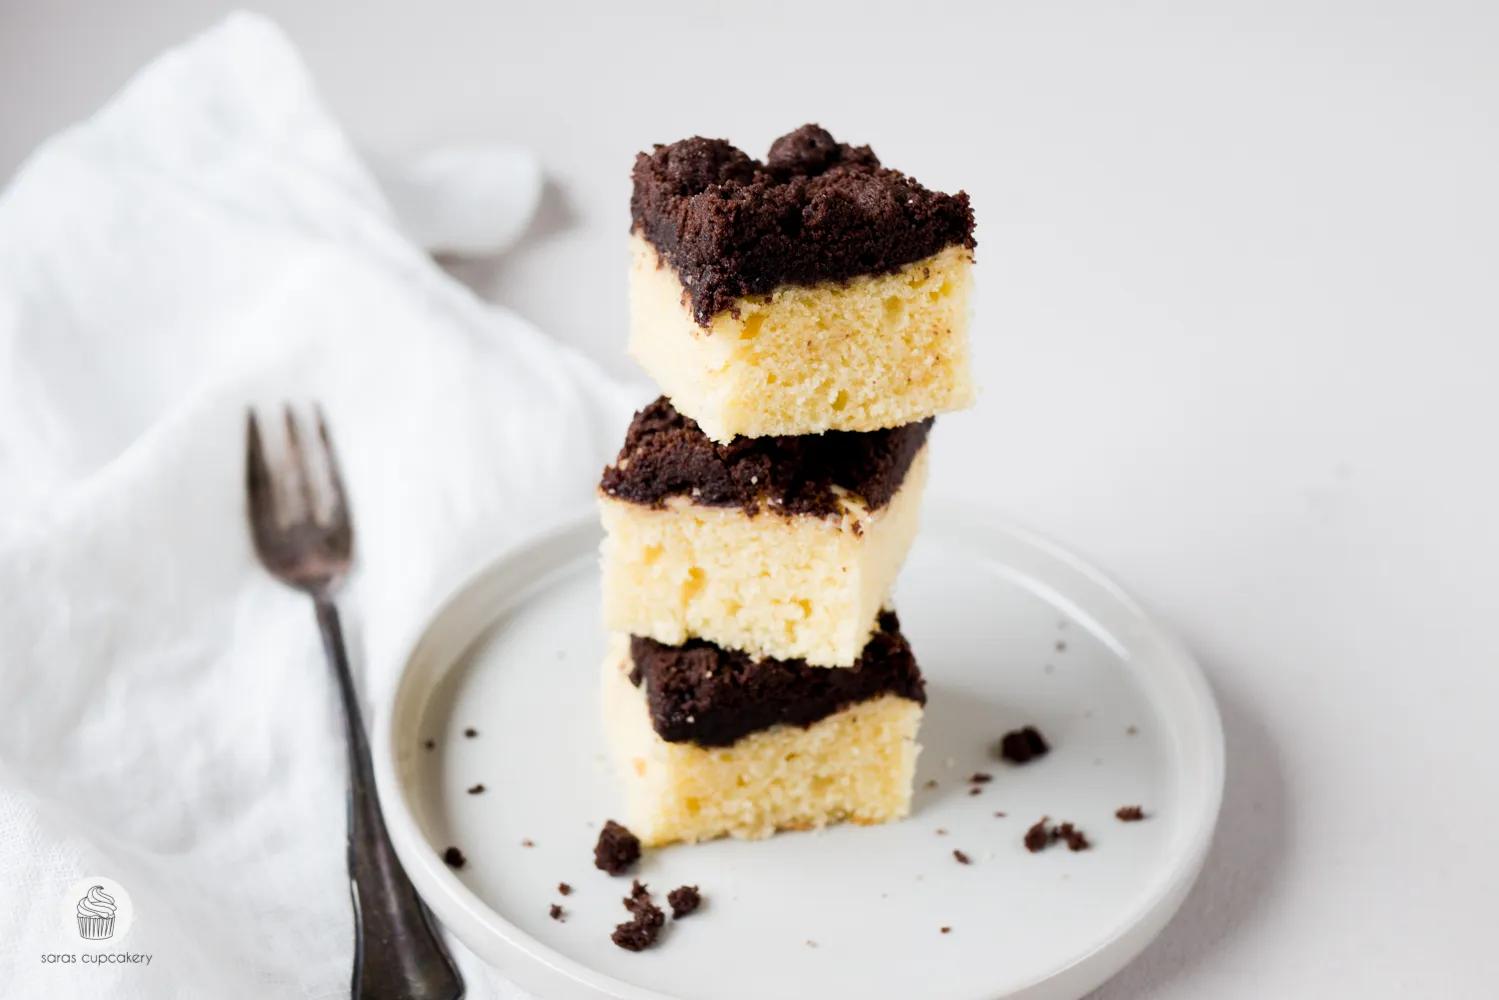 Rezept: schneller Blechkuchen mit Schokoladenstreuseln - Saras Cupcakery